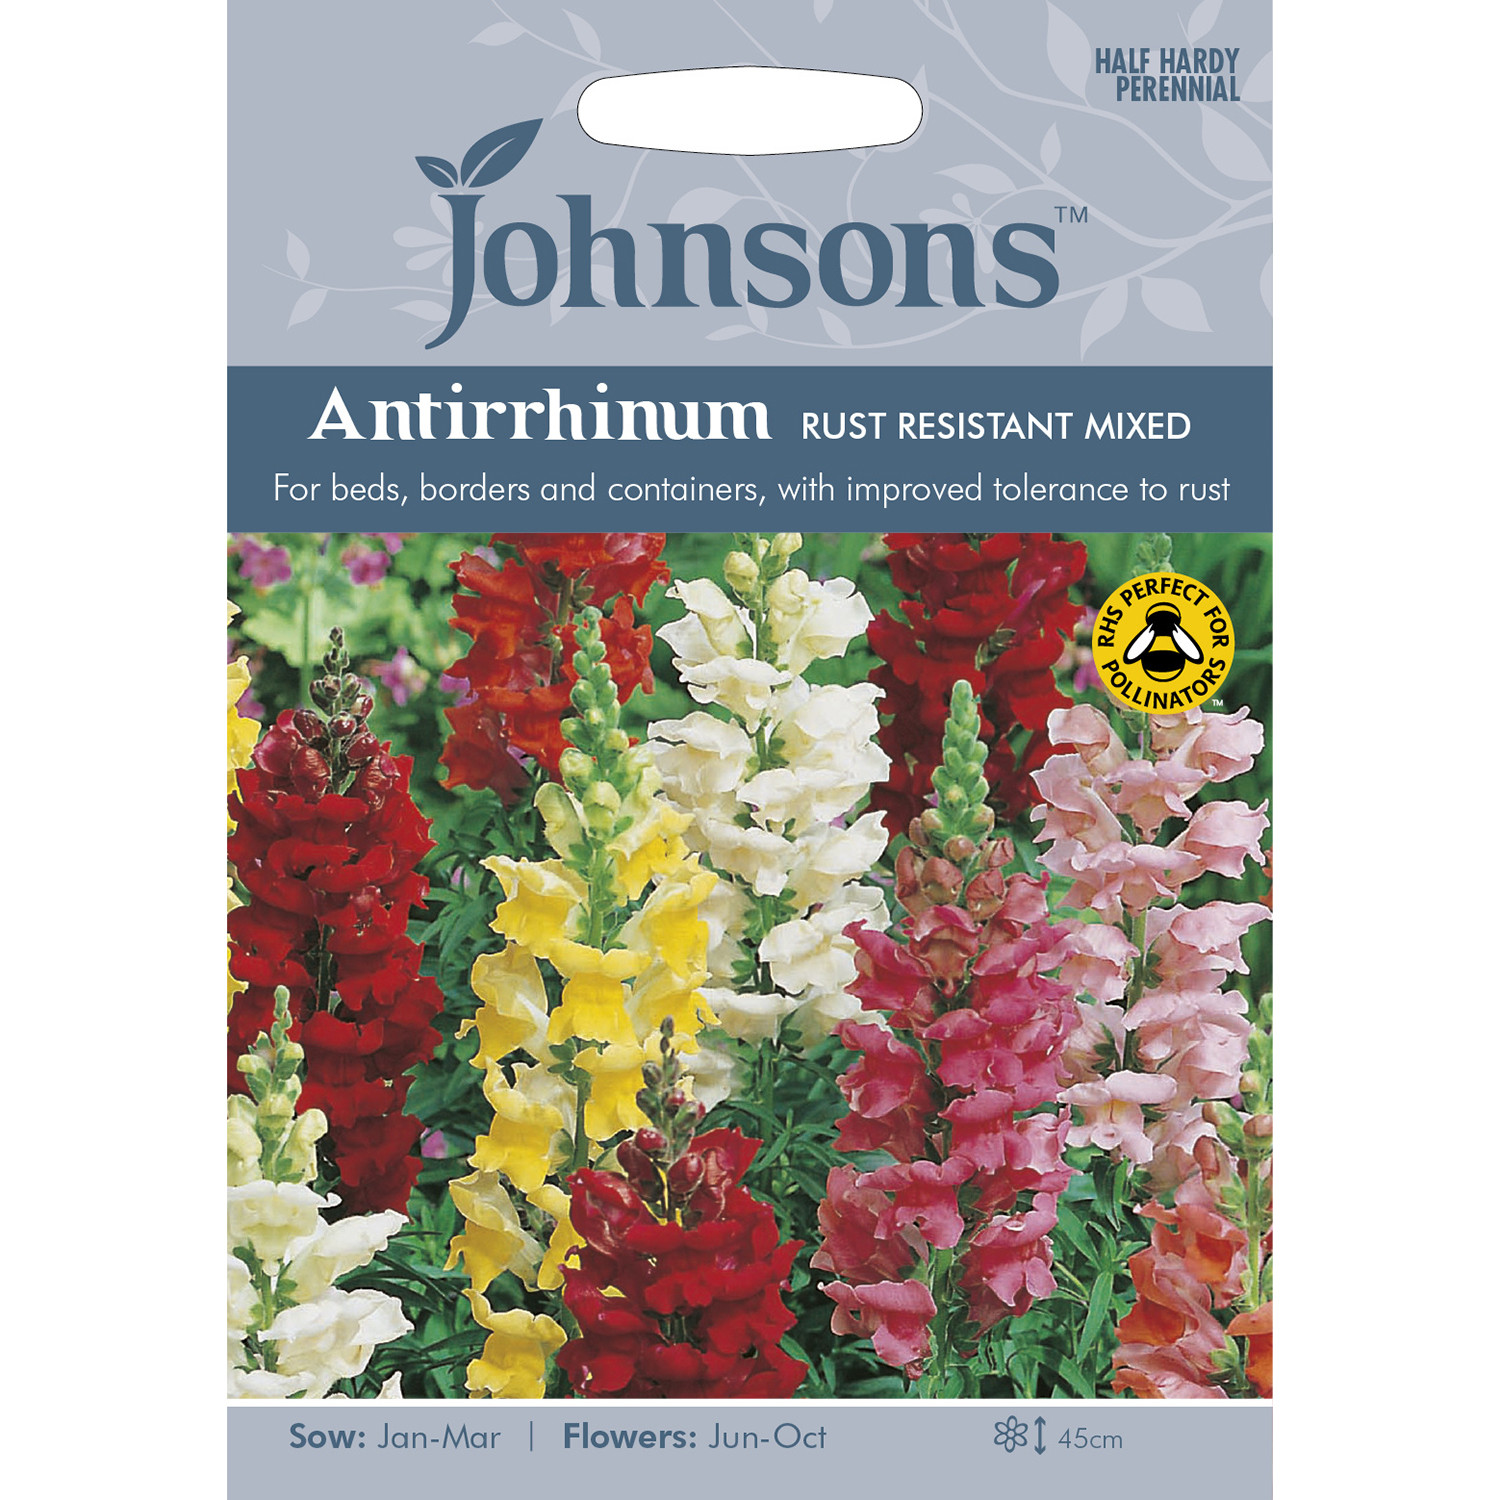 Johnsons Antirrhinum Rust Resistant Mixed Flower Seeds Image 2